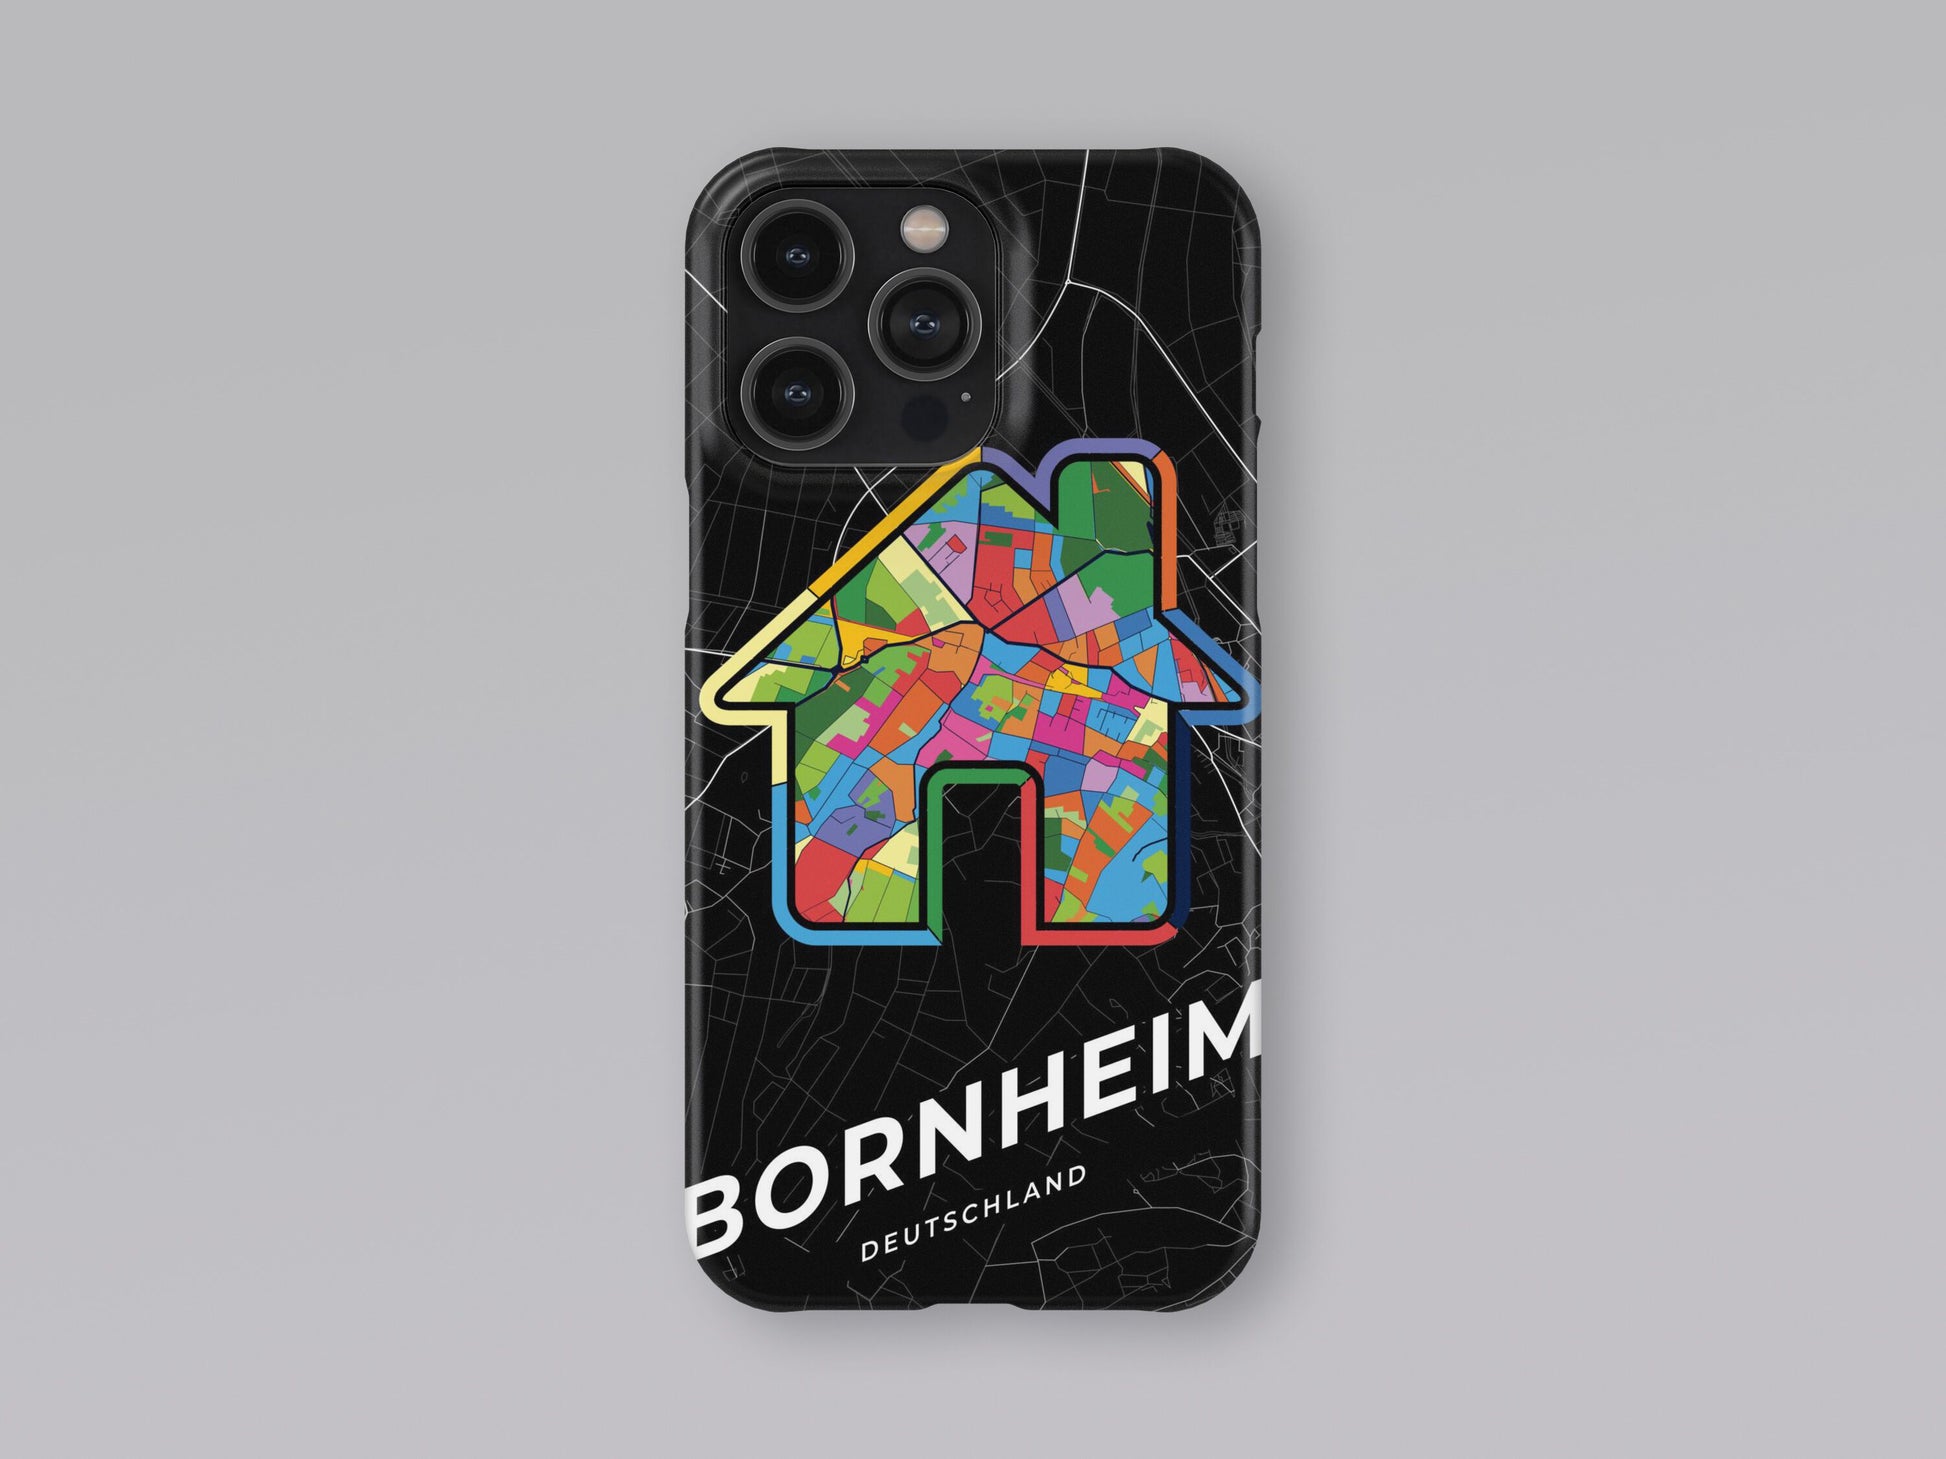 Bornheim Deutschland slim phone case with colorful icon. Birthday, wedding or housewarming gift. Couple match cases. 3